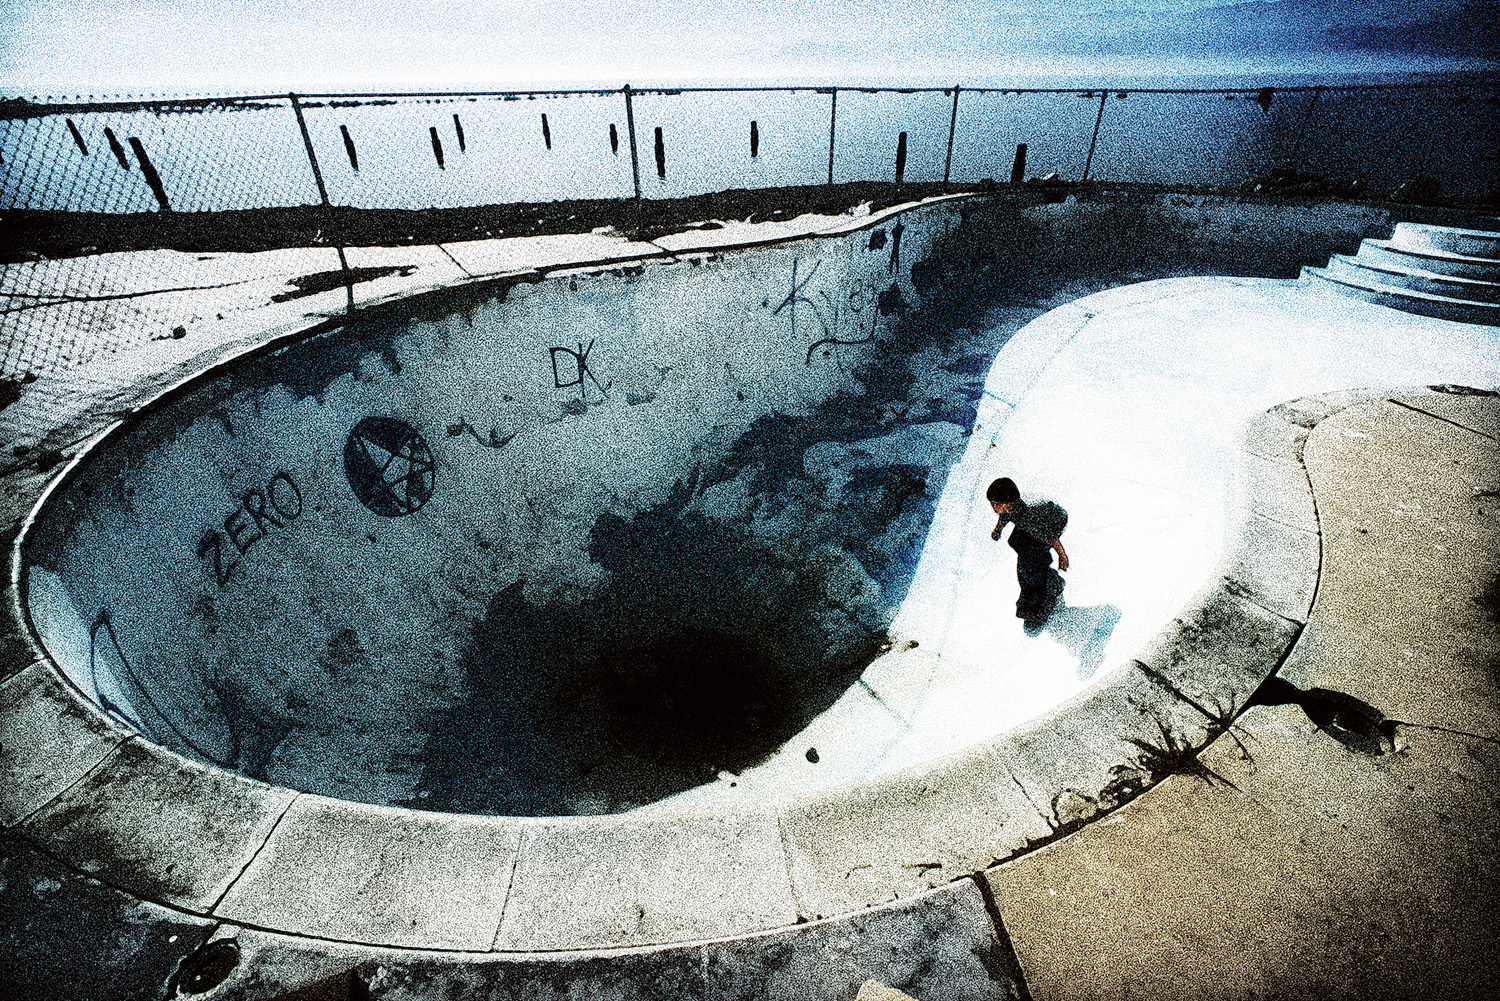 Gritty lifestyle photo of boy skateboarding on side of empty urban pool  — Studio 3, Inc.